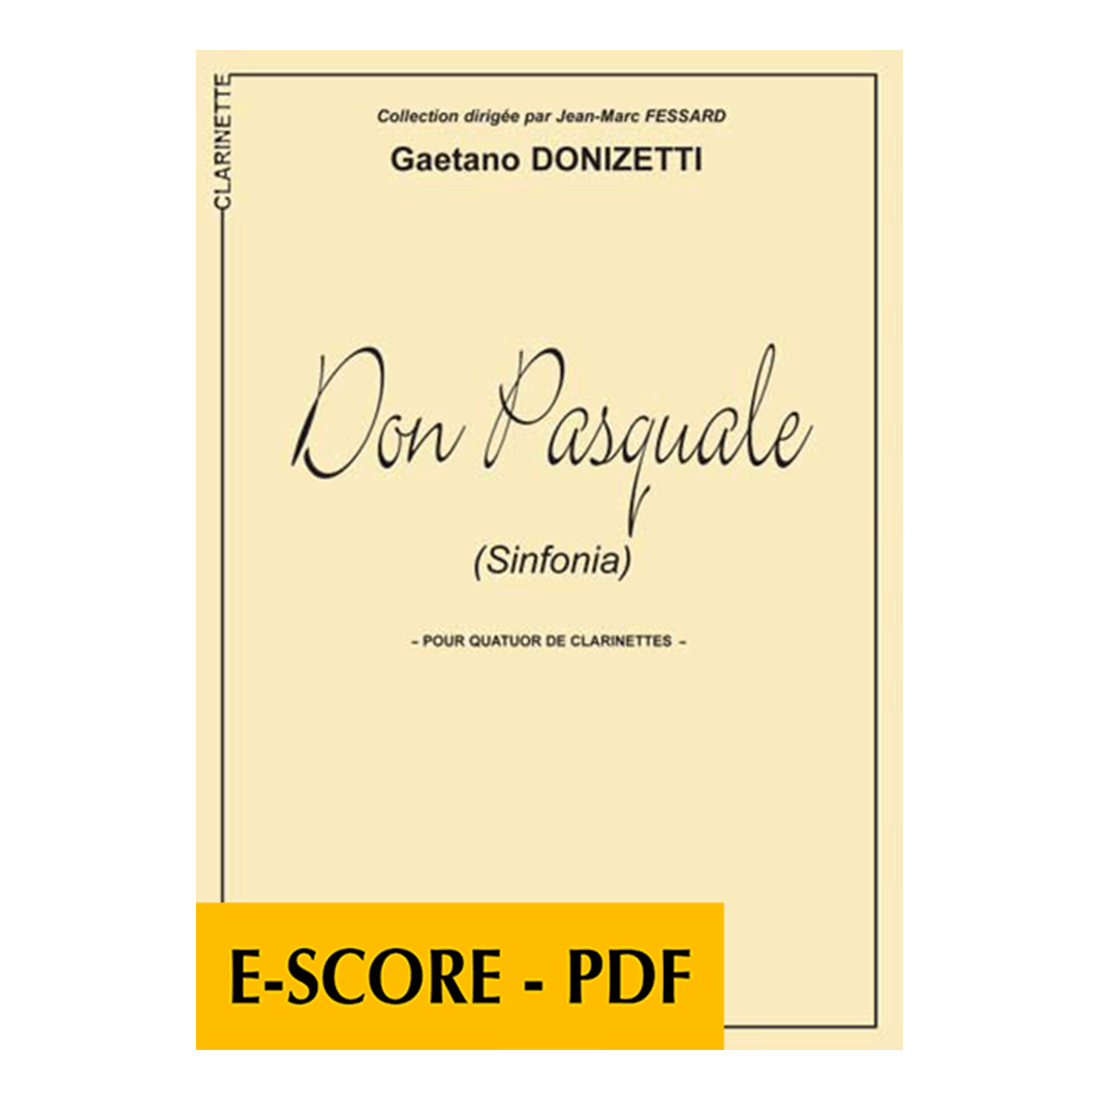 Don Pasquale (Sinfonia) für Klarinettenquartett - E-score PDF